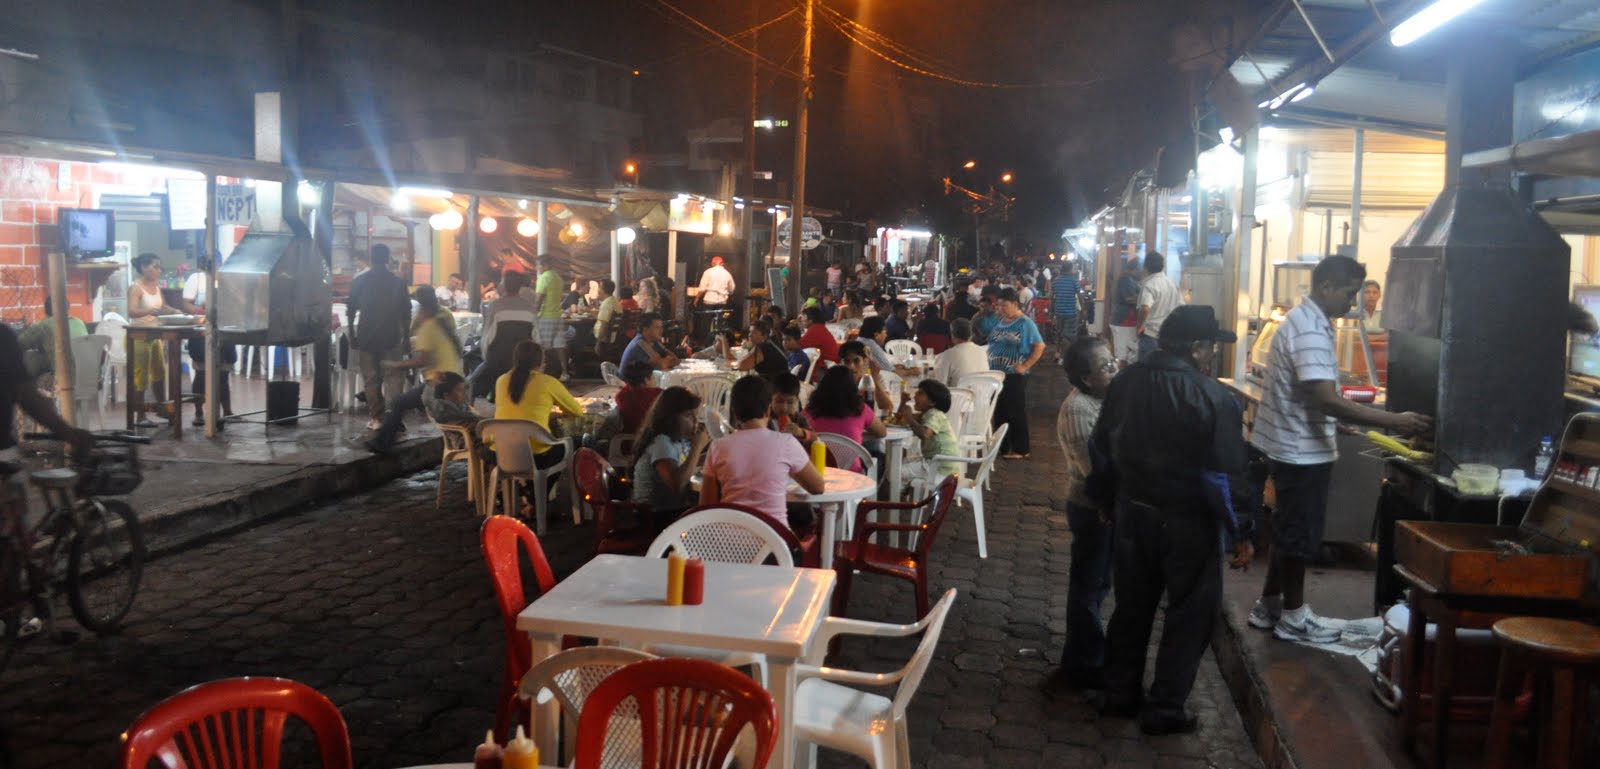 Street food scene at nighttime